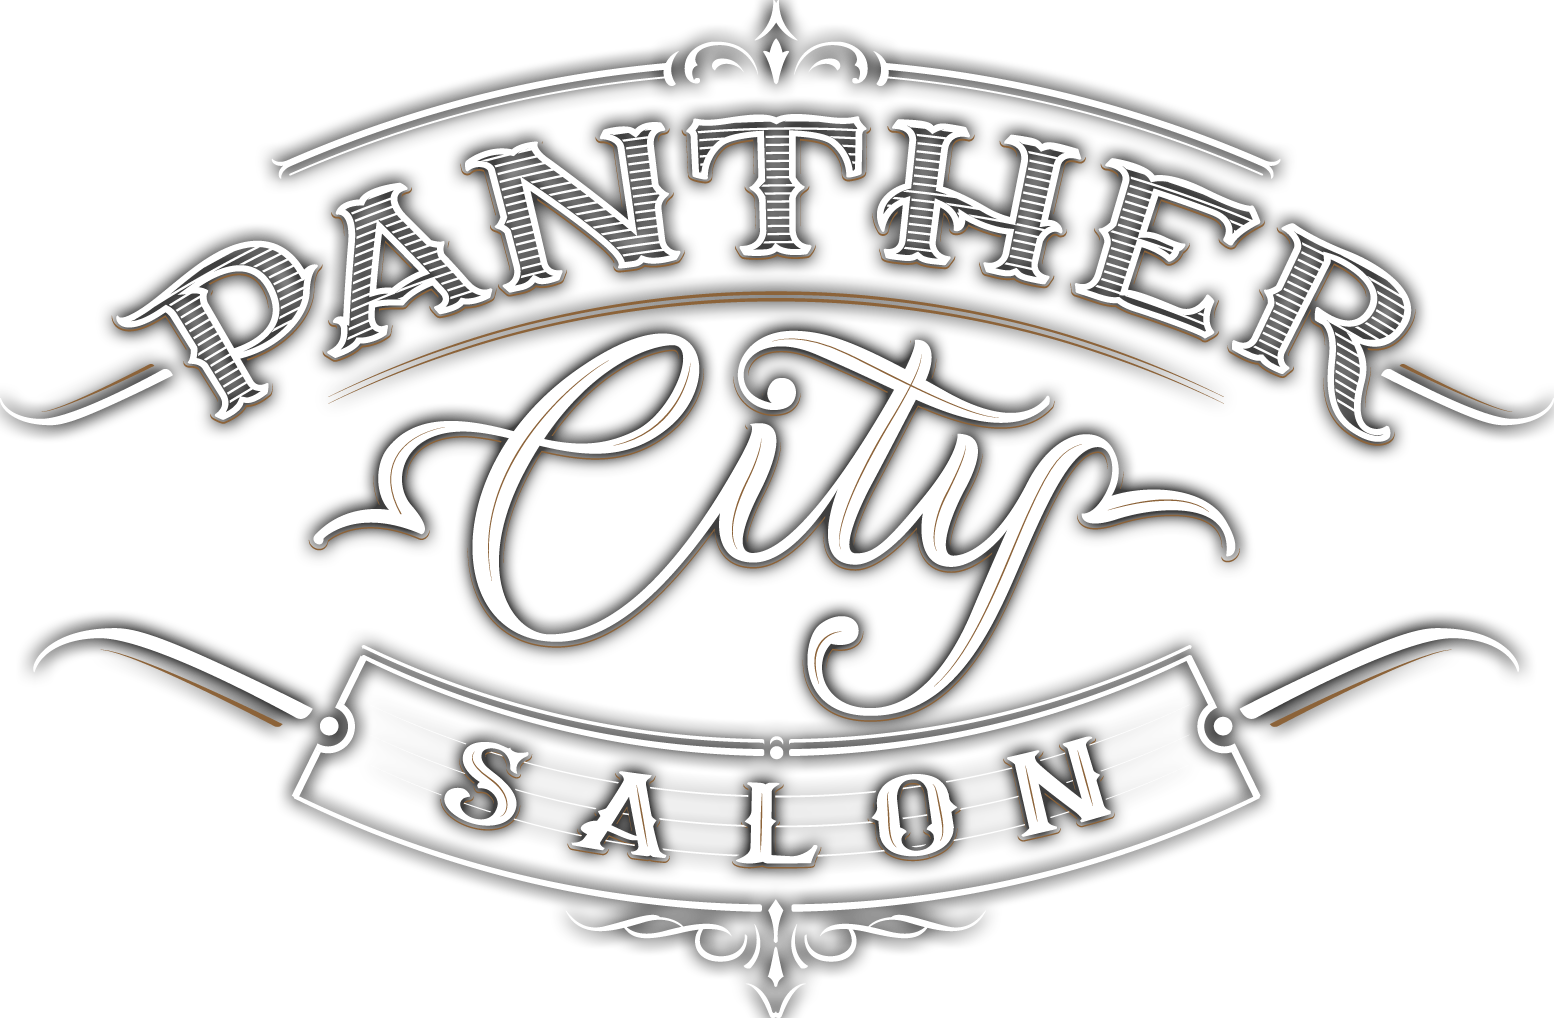 Panther City Salon